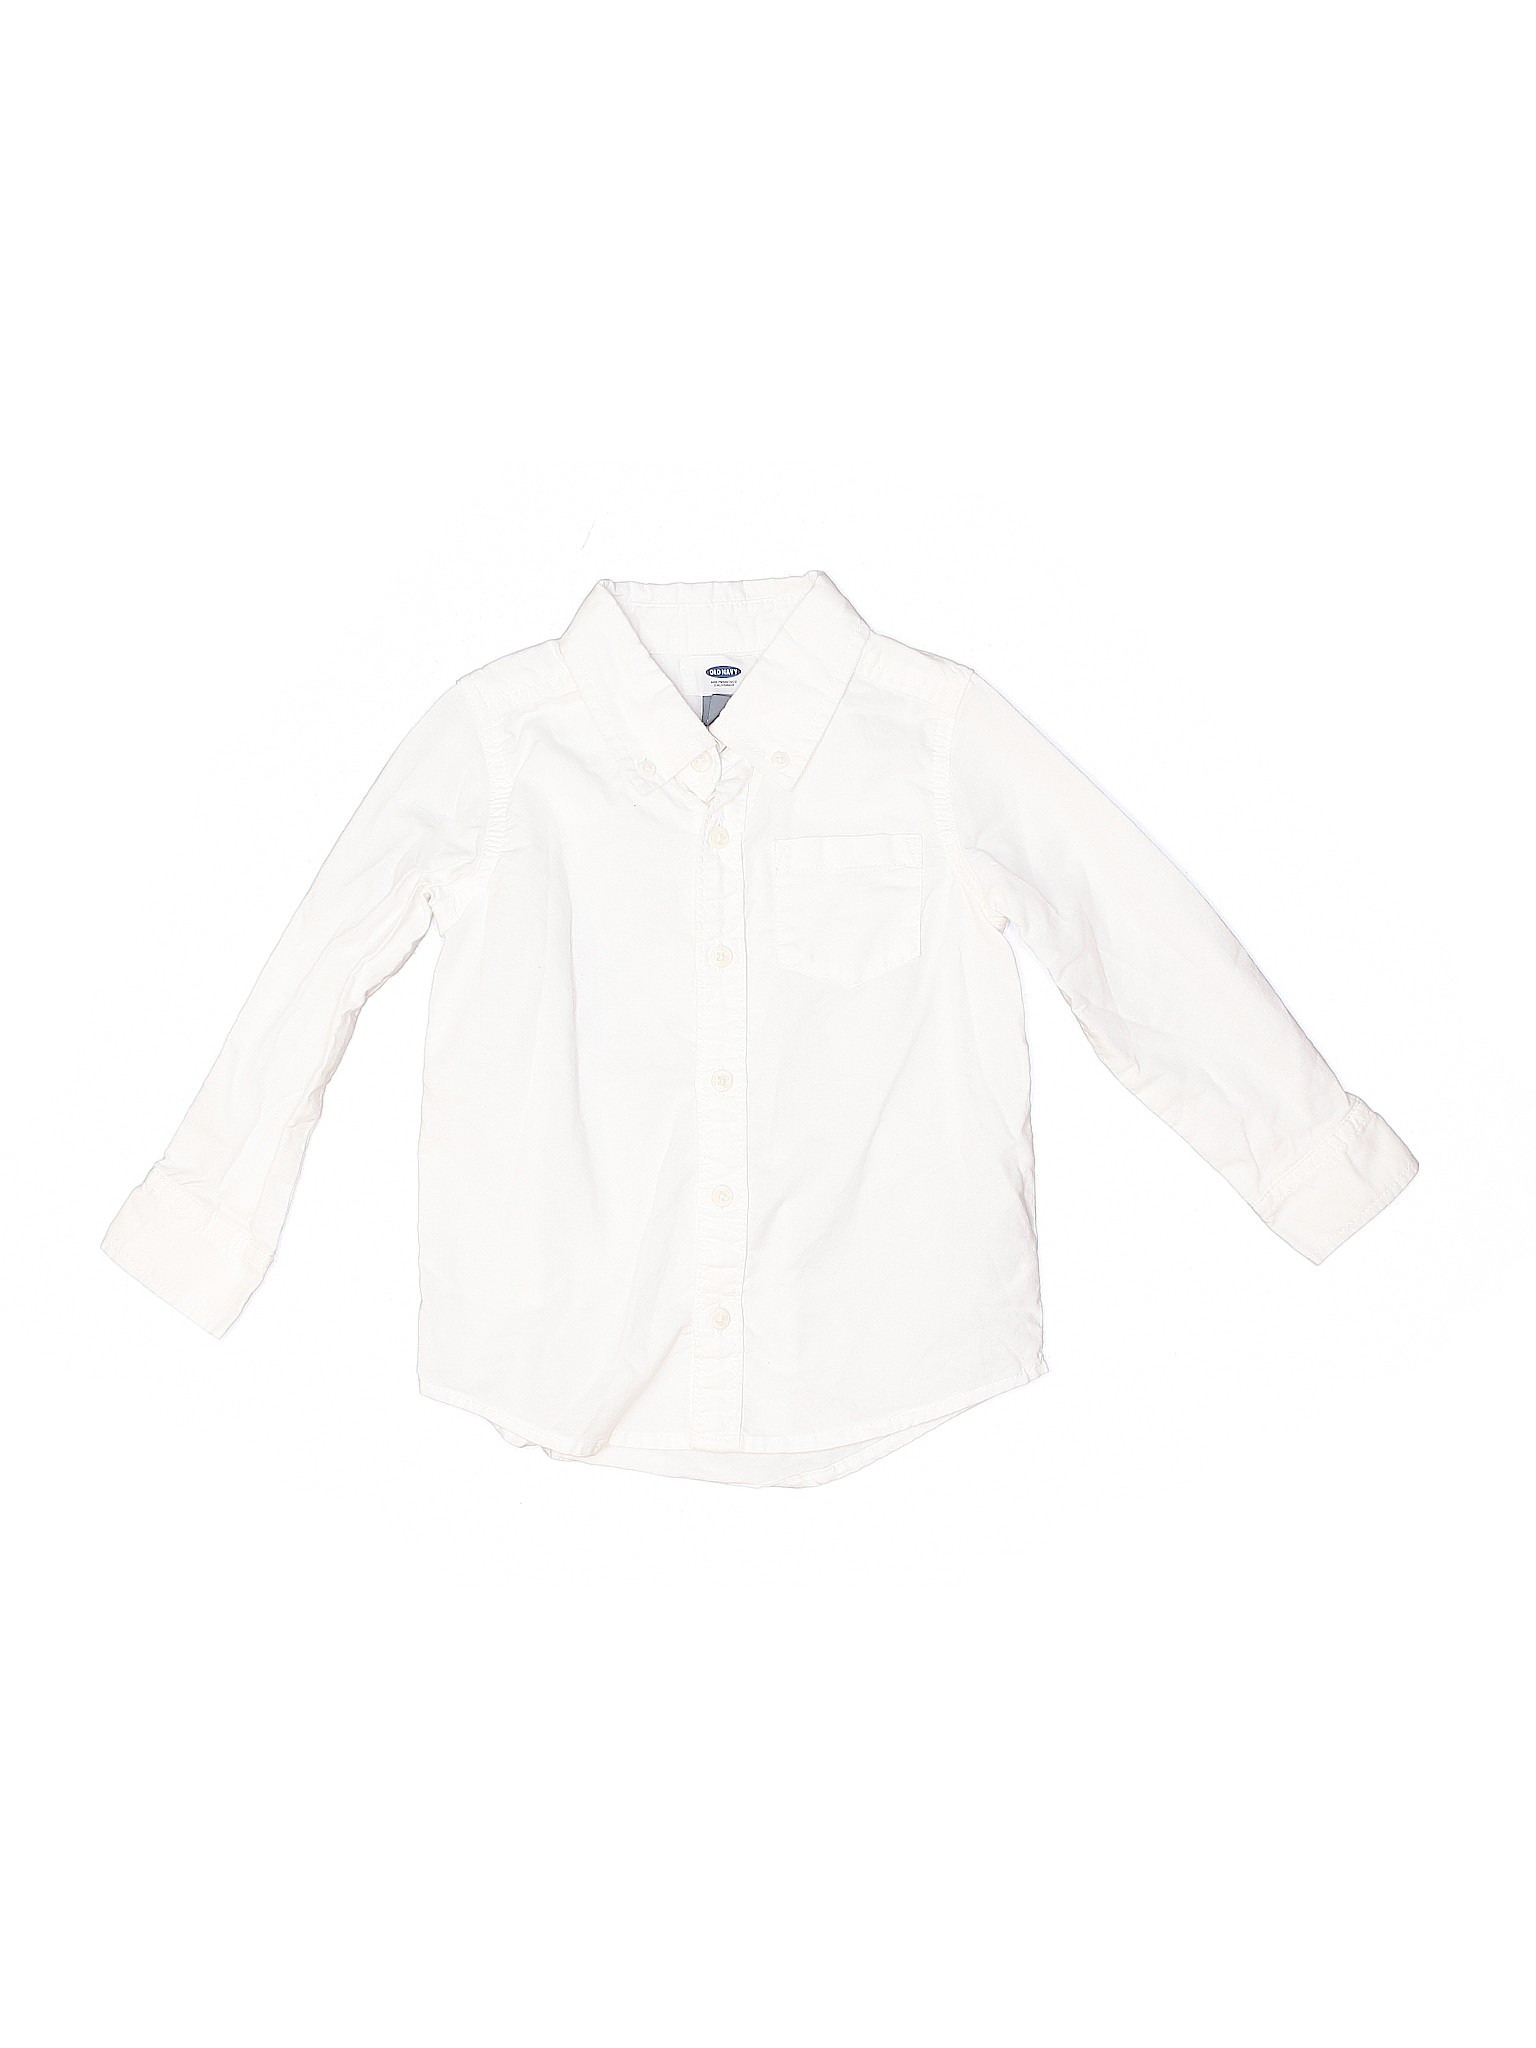 Old Navy Boys White Long Sleeve Button-Down Shirt 3T | eBay